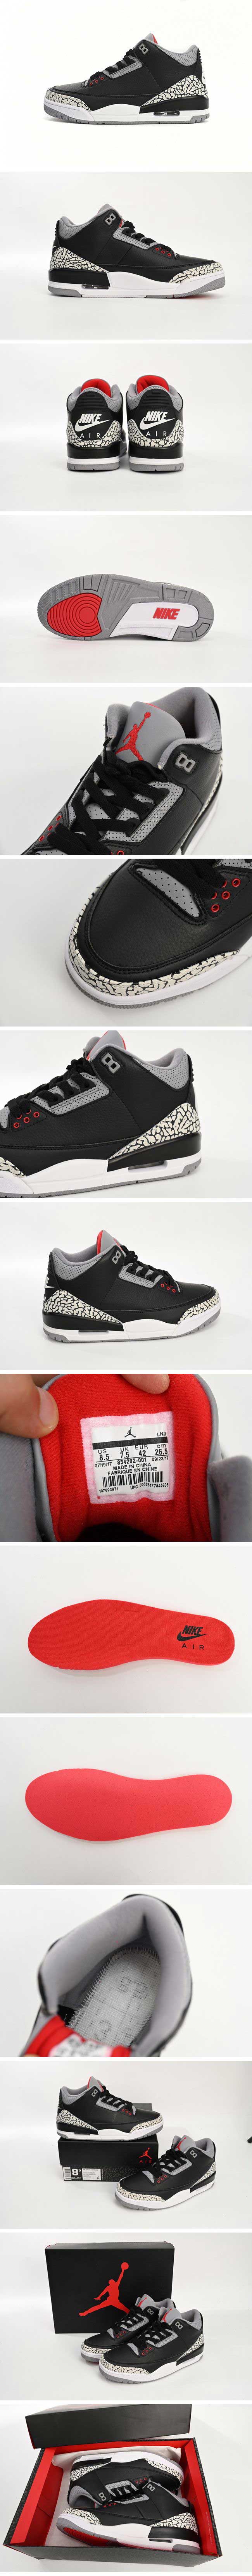 Nike Air Jordan 3 Retro OG 